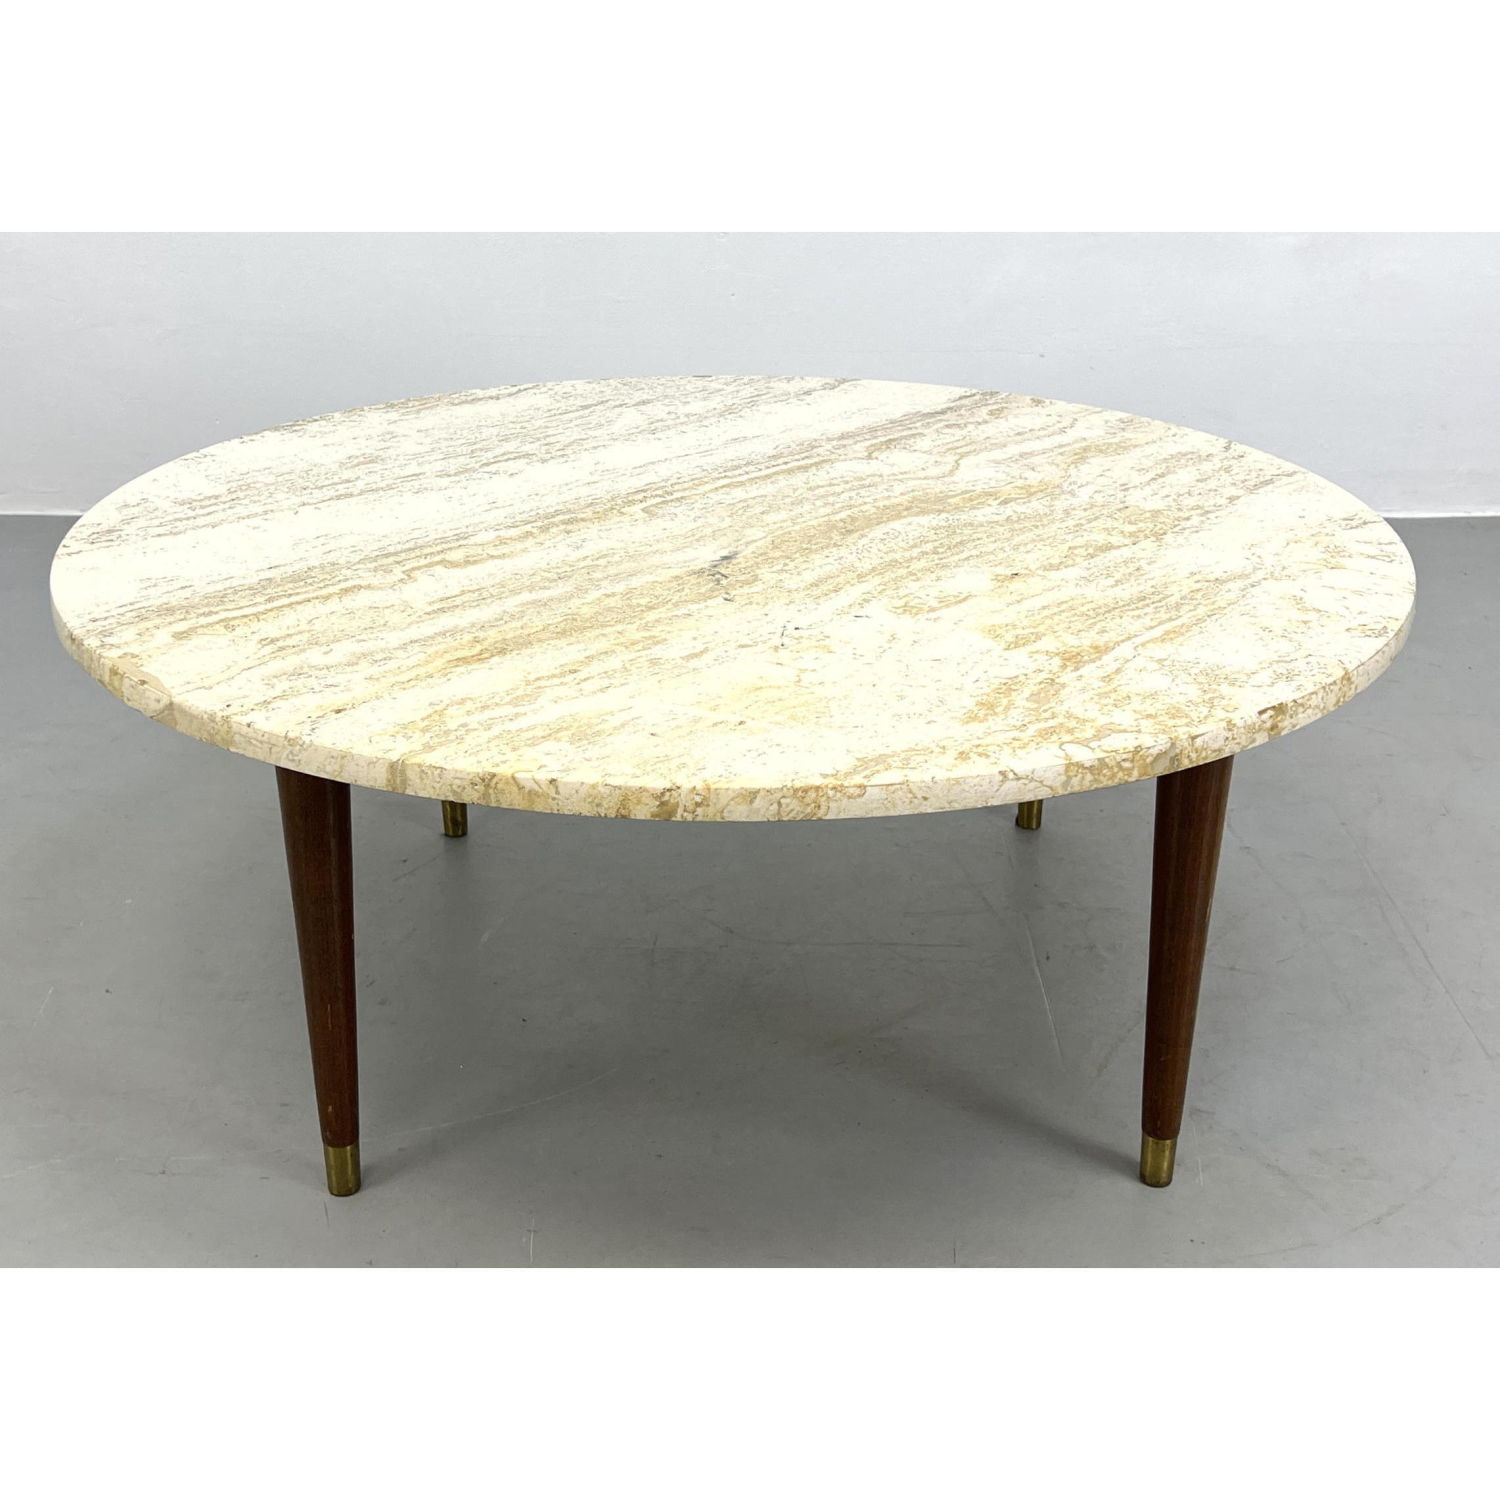 Travertine Top Coffee Table. Wood metal